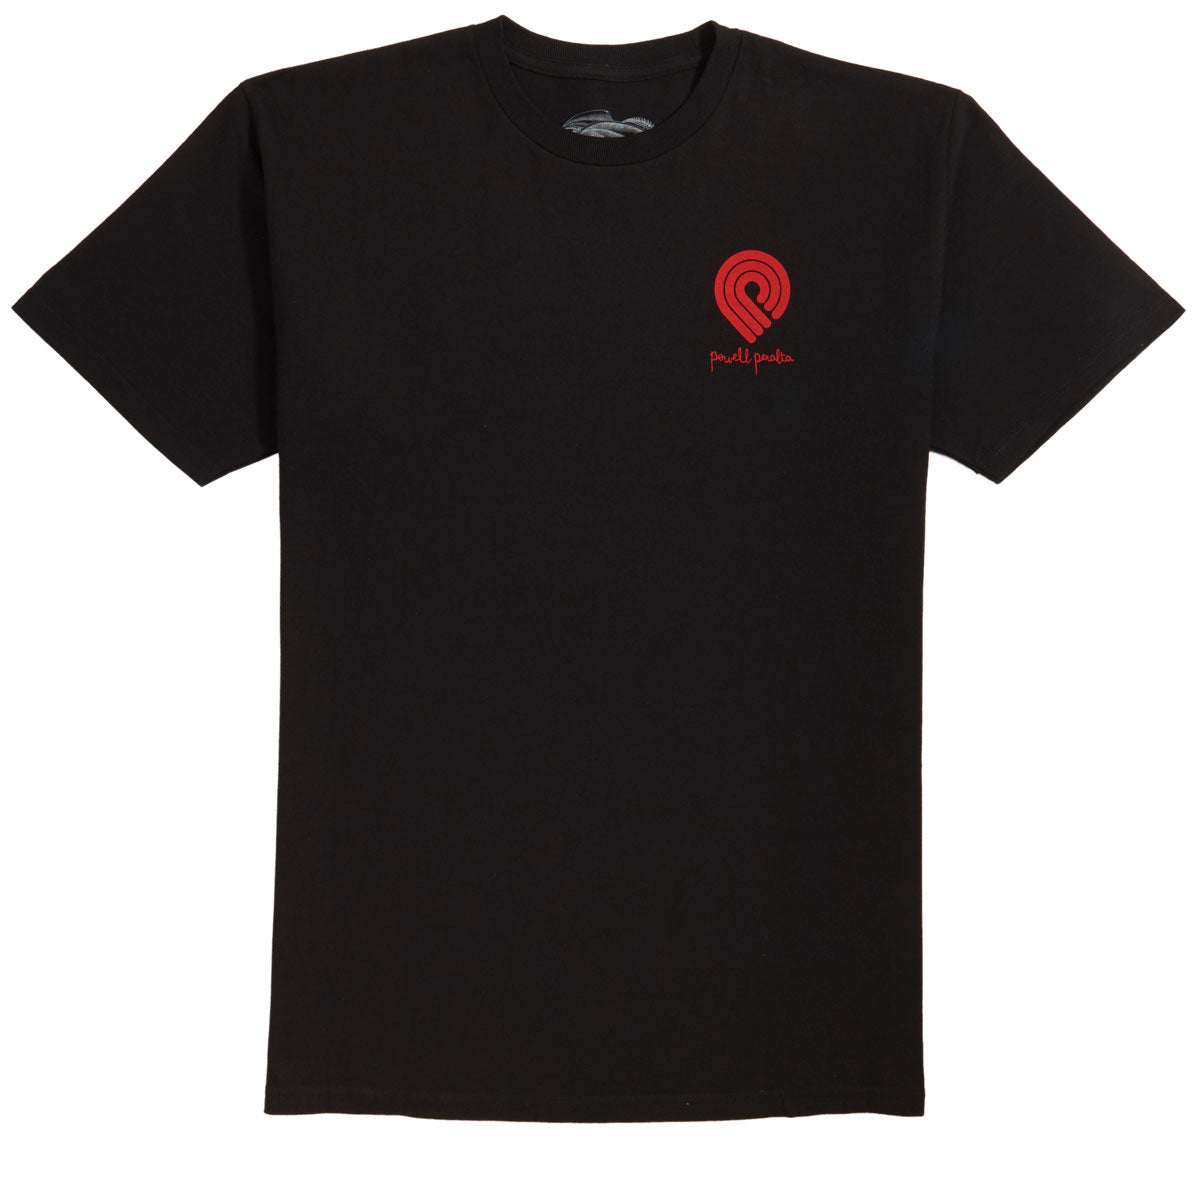 Powell-Peralta Tucking Skeleton T-Shirt - Black image 2